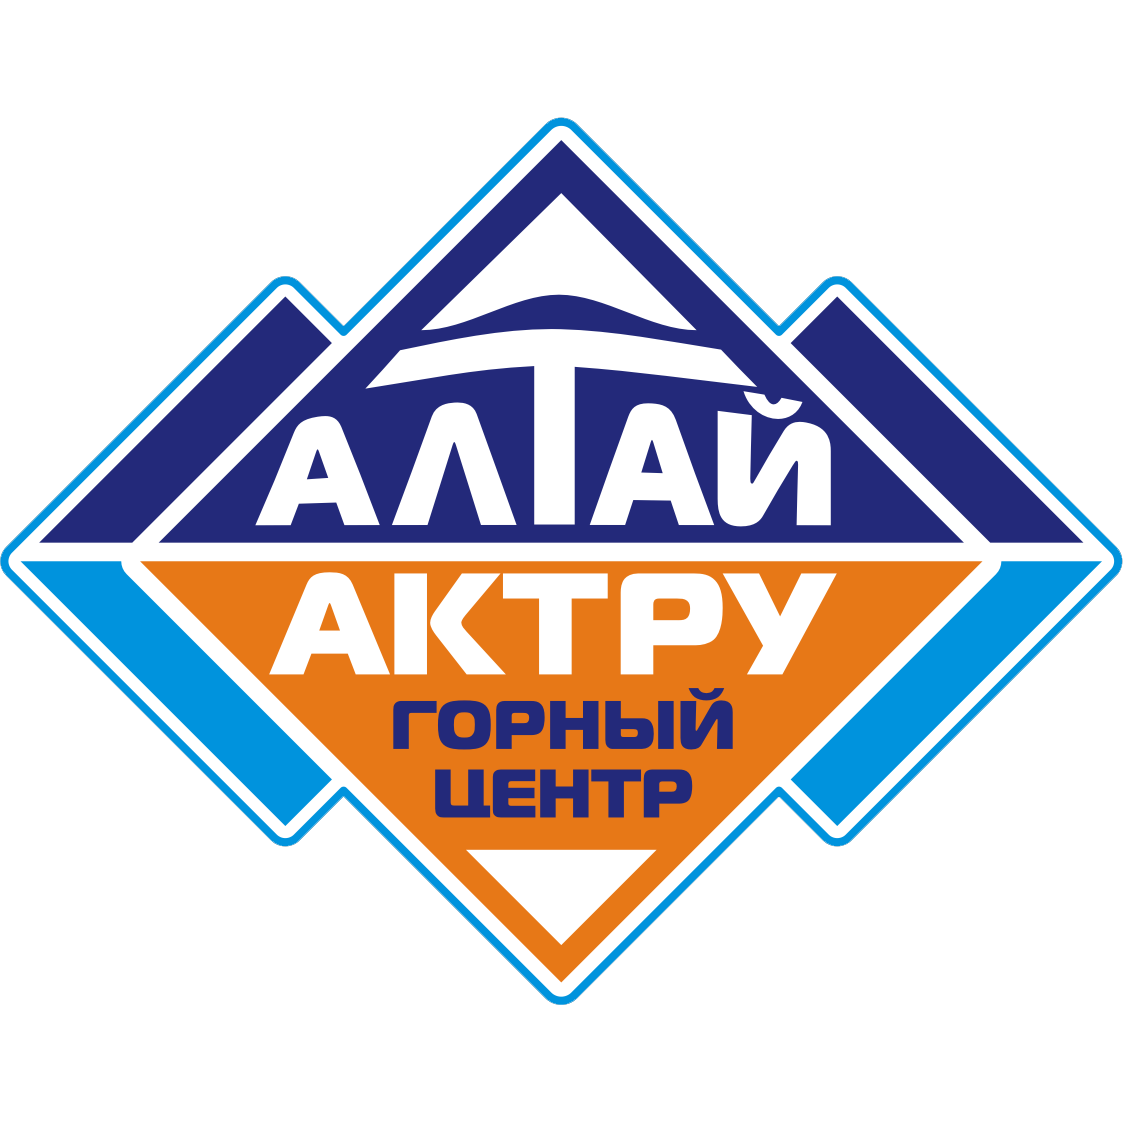 Горный центр «Алтай-Актру»